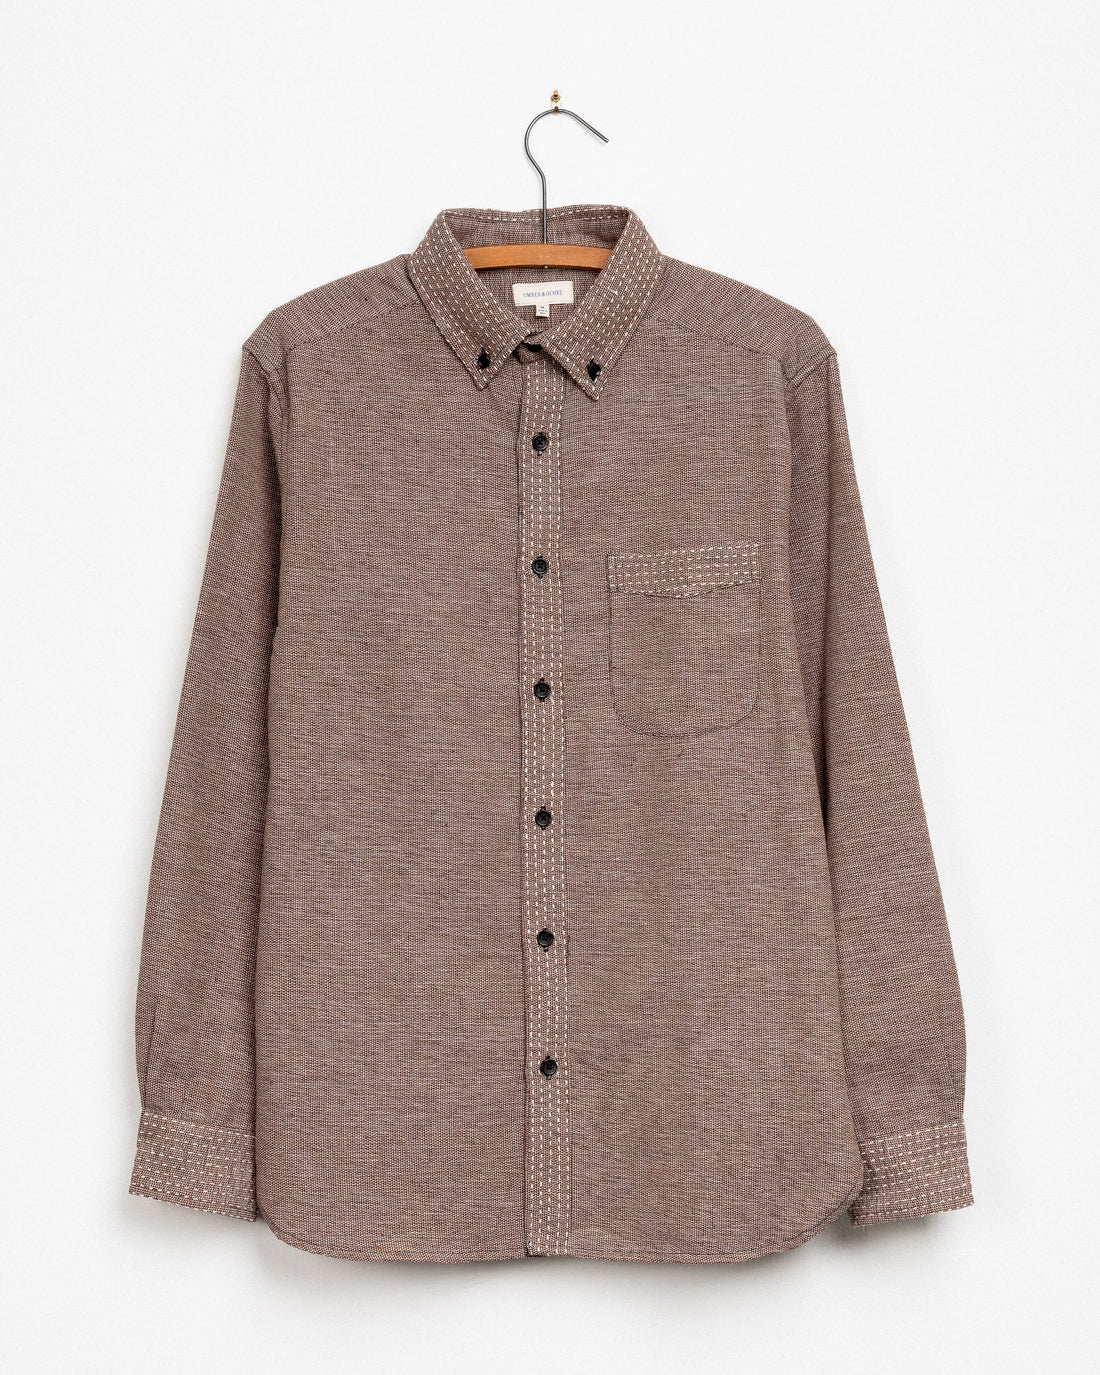 Kabir Shirt in Beige Cotton Flat Weave Tweed